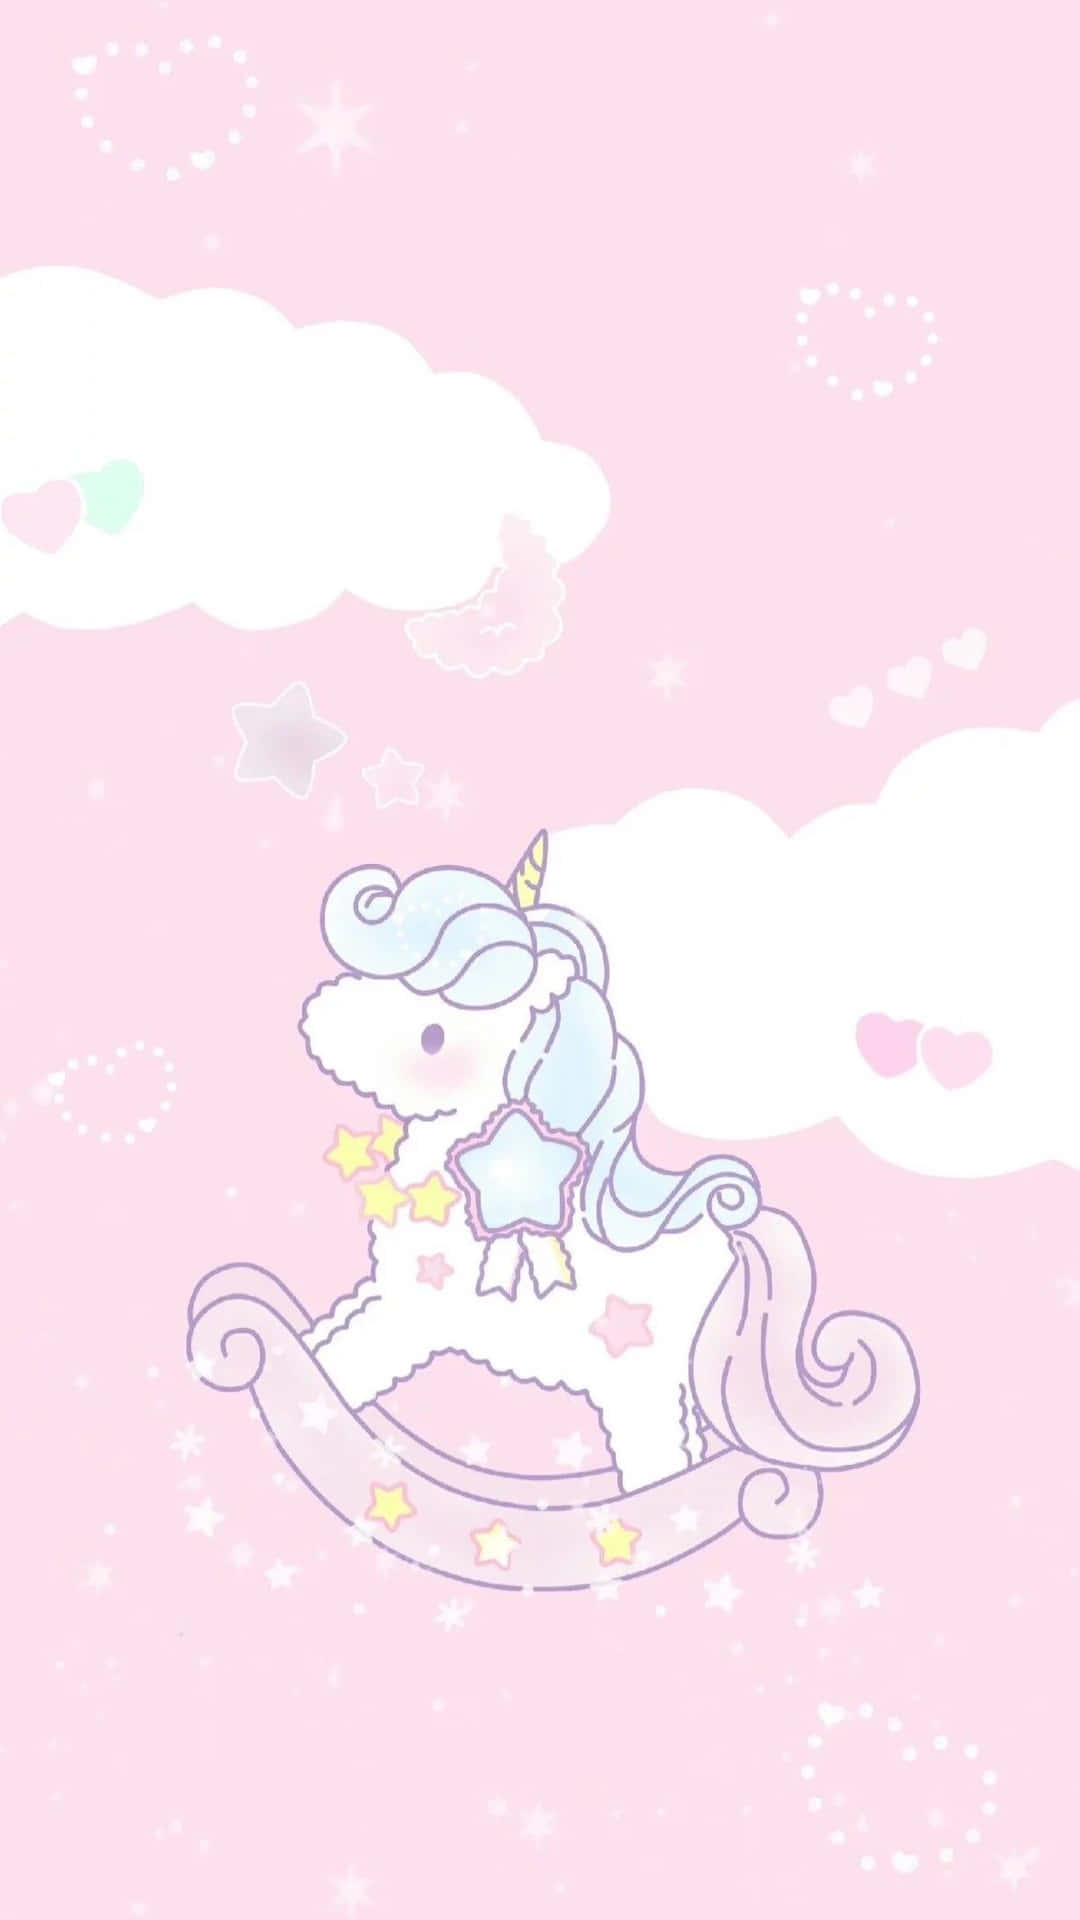 Adorable Kawaii Unicorn in a Dreamy World Wallpaper